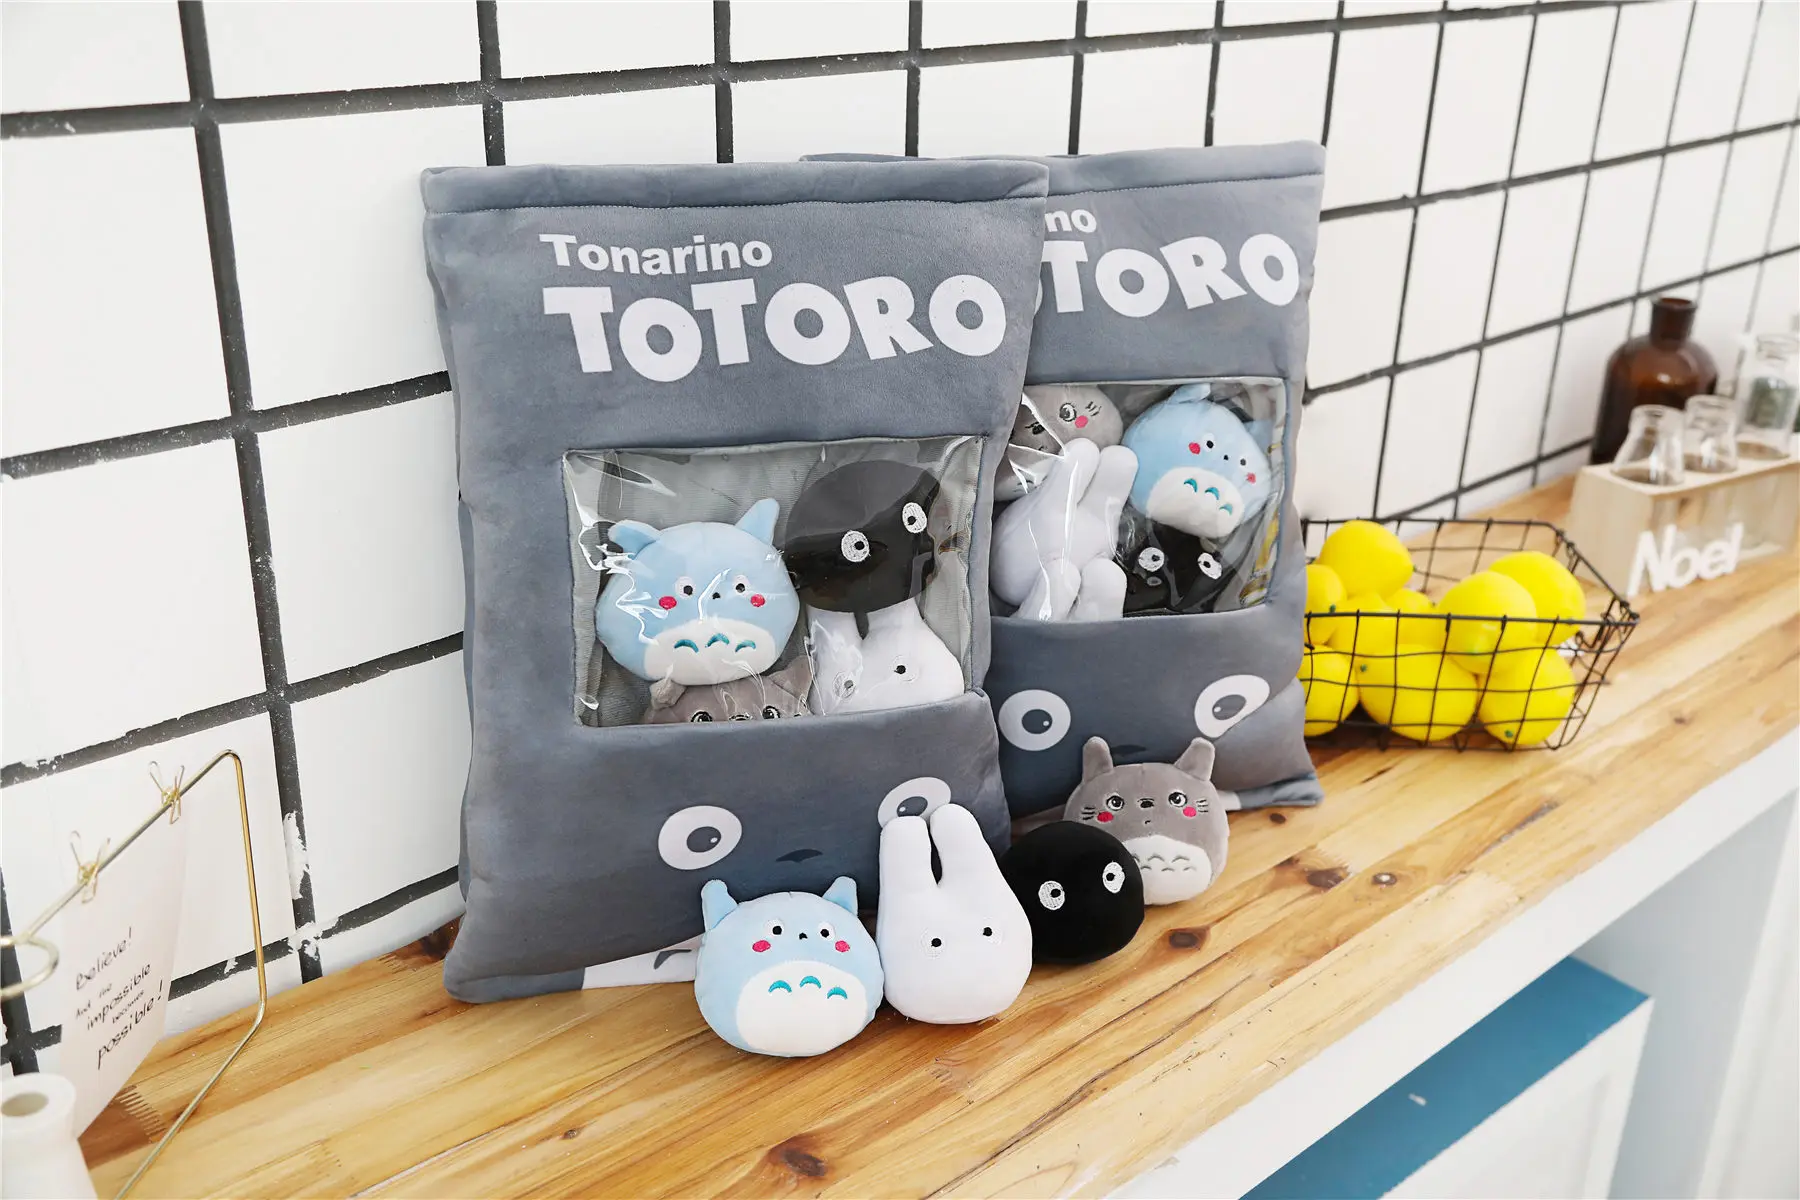 https://ae01.alicdn.com/kf/S13337287228d4c9fa4a85e4c750e0627l/8pcs-lots-4-Designs-Creative-Plush-Toys-Totoro-Snack-Pillow-Dolls-Stuffed-kawaii-My-Neighbor-Totoro.jpg